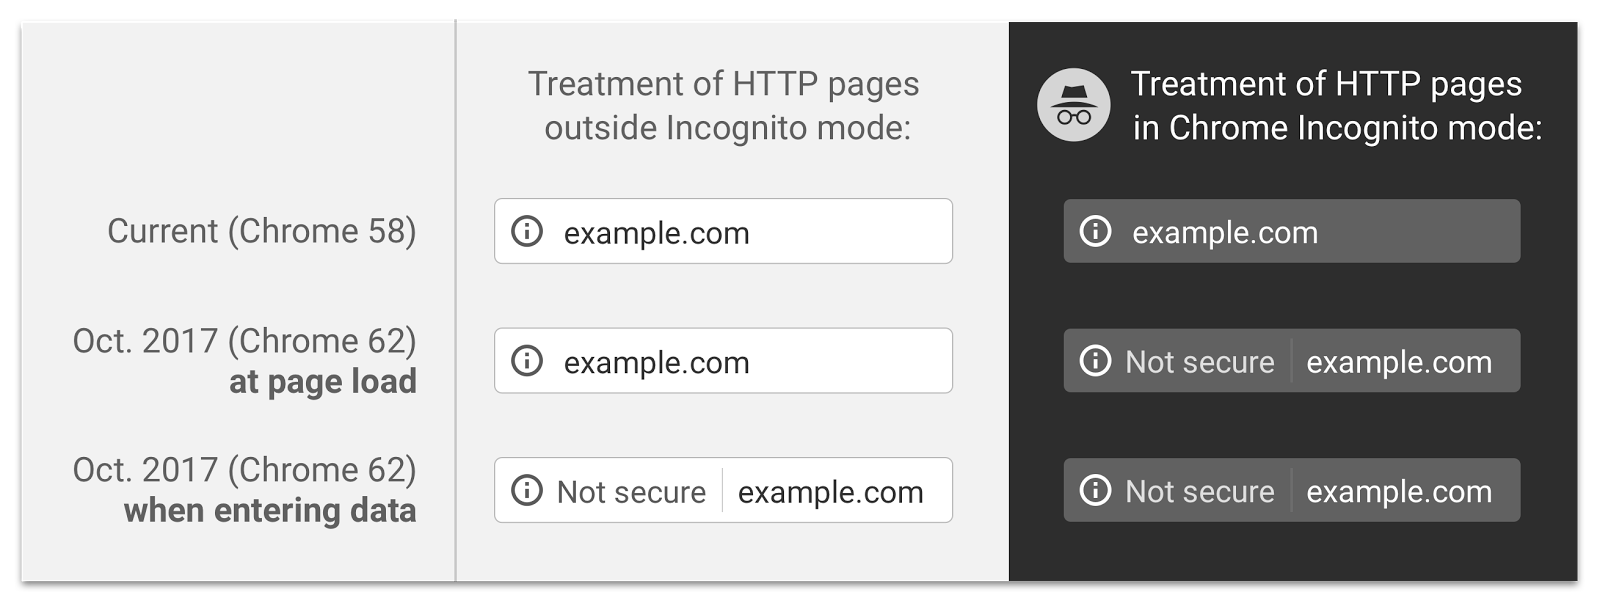 Tretman HTTP strana u Chrome 62